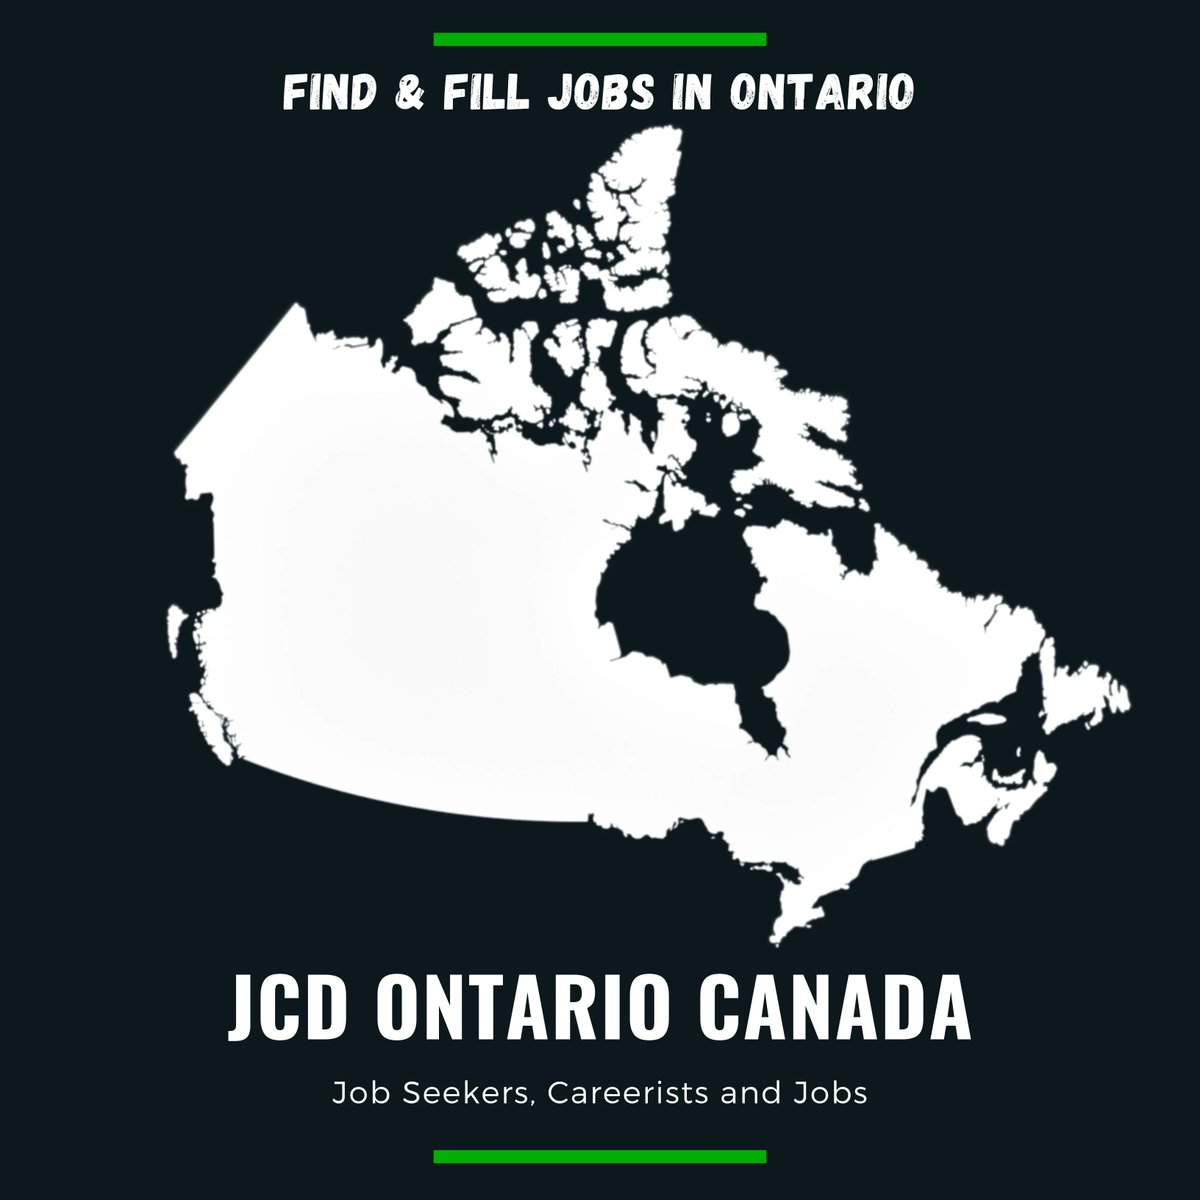 Looking for #jobs or #hiring #Talent in #Ontario? GO HERE buff.ly/3pTul8W

#Toronto #Mississauga #Torontojobs #GTAjobs #Ottawajobs #Hamiltonjobs #Kitchenerjobs #Barriejobs #Guelphjobs #Niagarajobs #Mississaugjobs #Pickeringjobs #Sudburyjobs #Oakvillejobs #NorthBayjobs